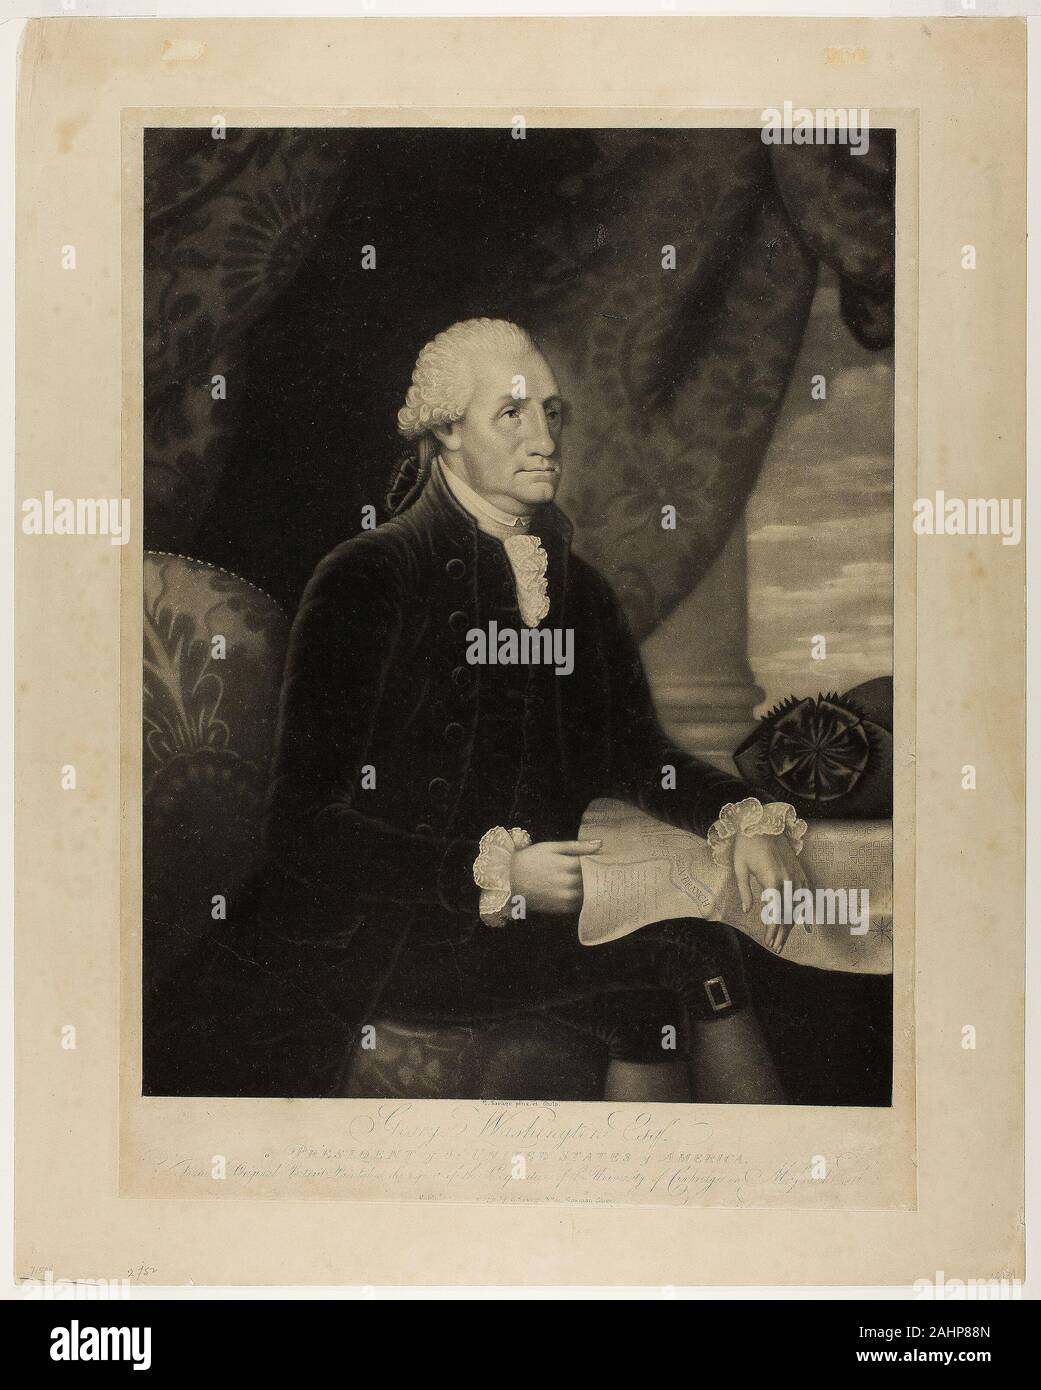 Edward Savage. George Washington. 1793. United States. Mezzotint with engraving in black on cream wove paper, laid down on cream wove paper (chine collé) Stock Photo